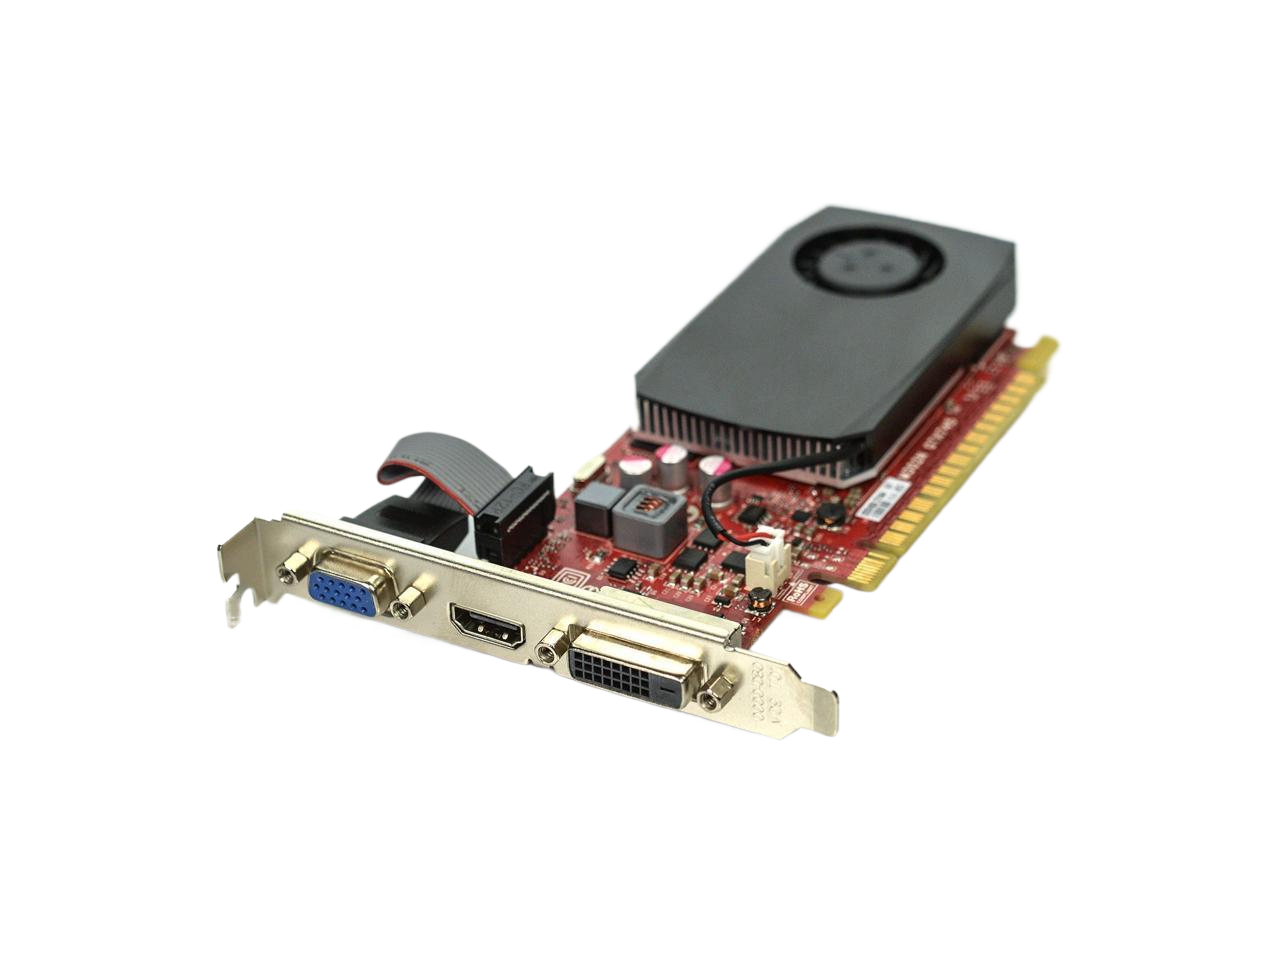 Dell TC2P0 NVIDIA GeForce GTX 745 4GB PCIe Video Card M302N GTX745 Full Bracket